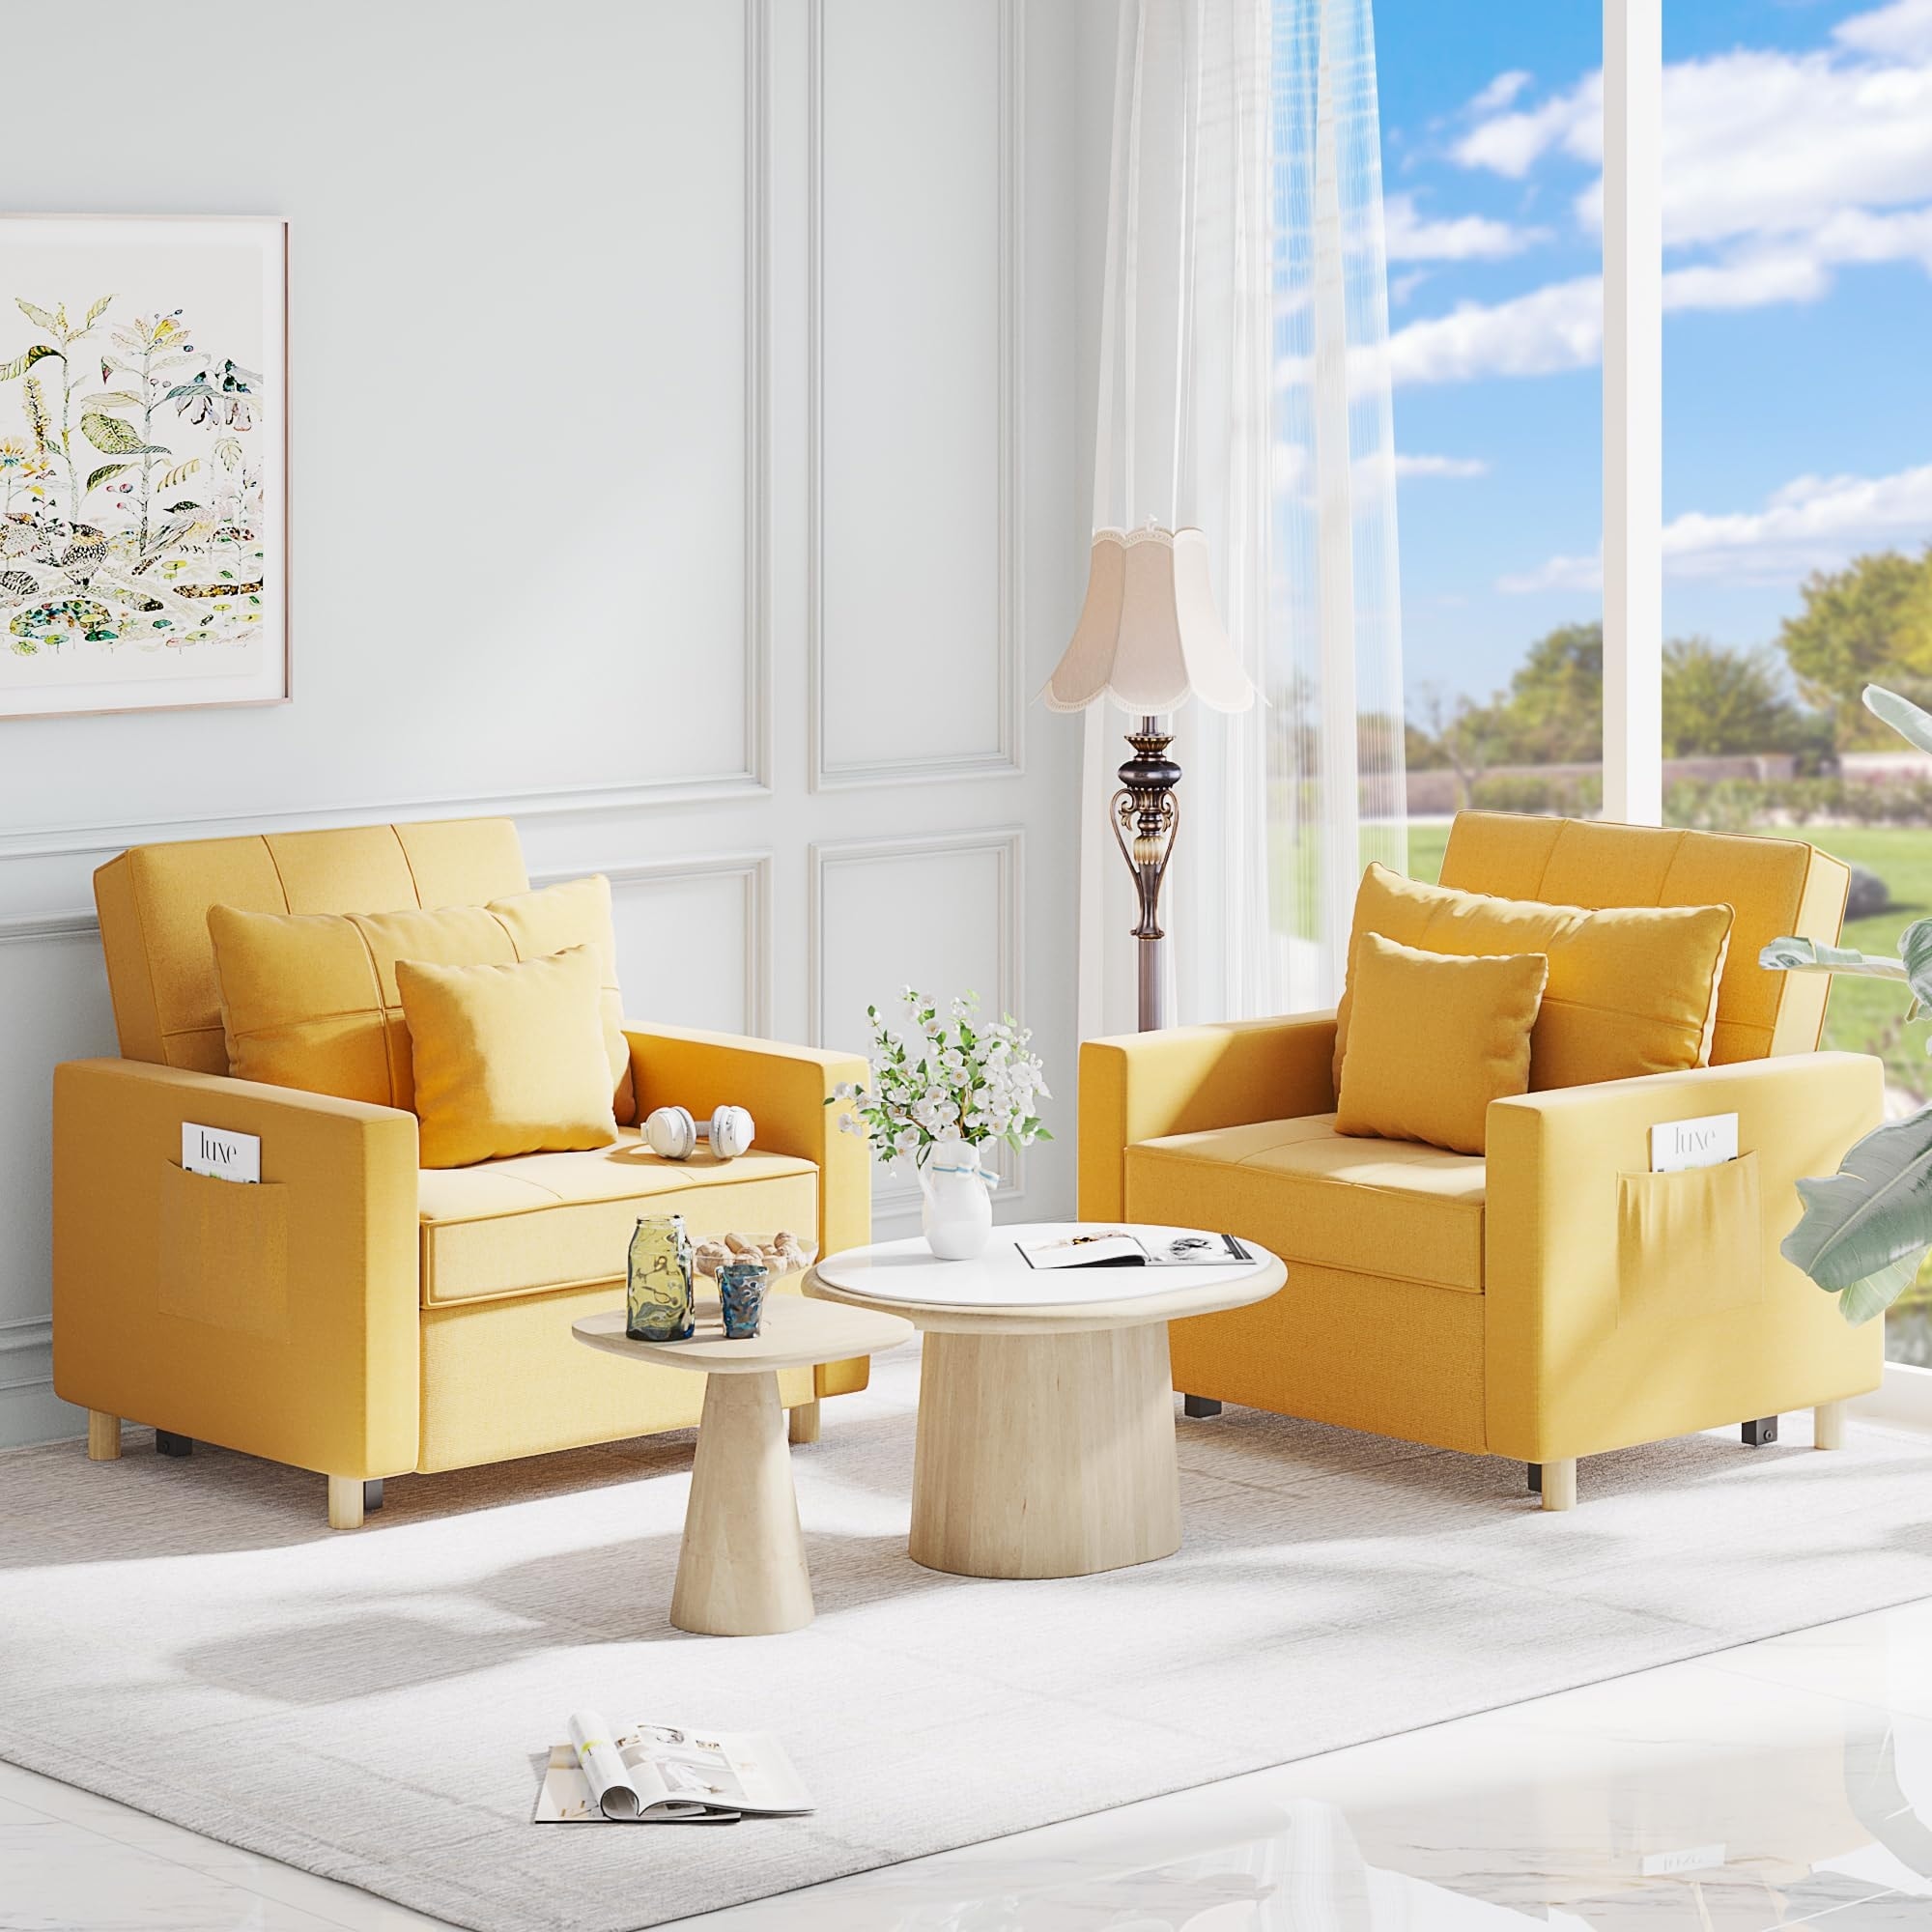 AECOJOY Adjustable Sleeper Chair Bed 3-in-1 Convertible Futon Sofa - Yellow